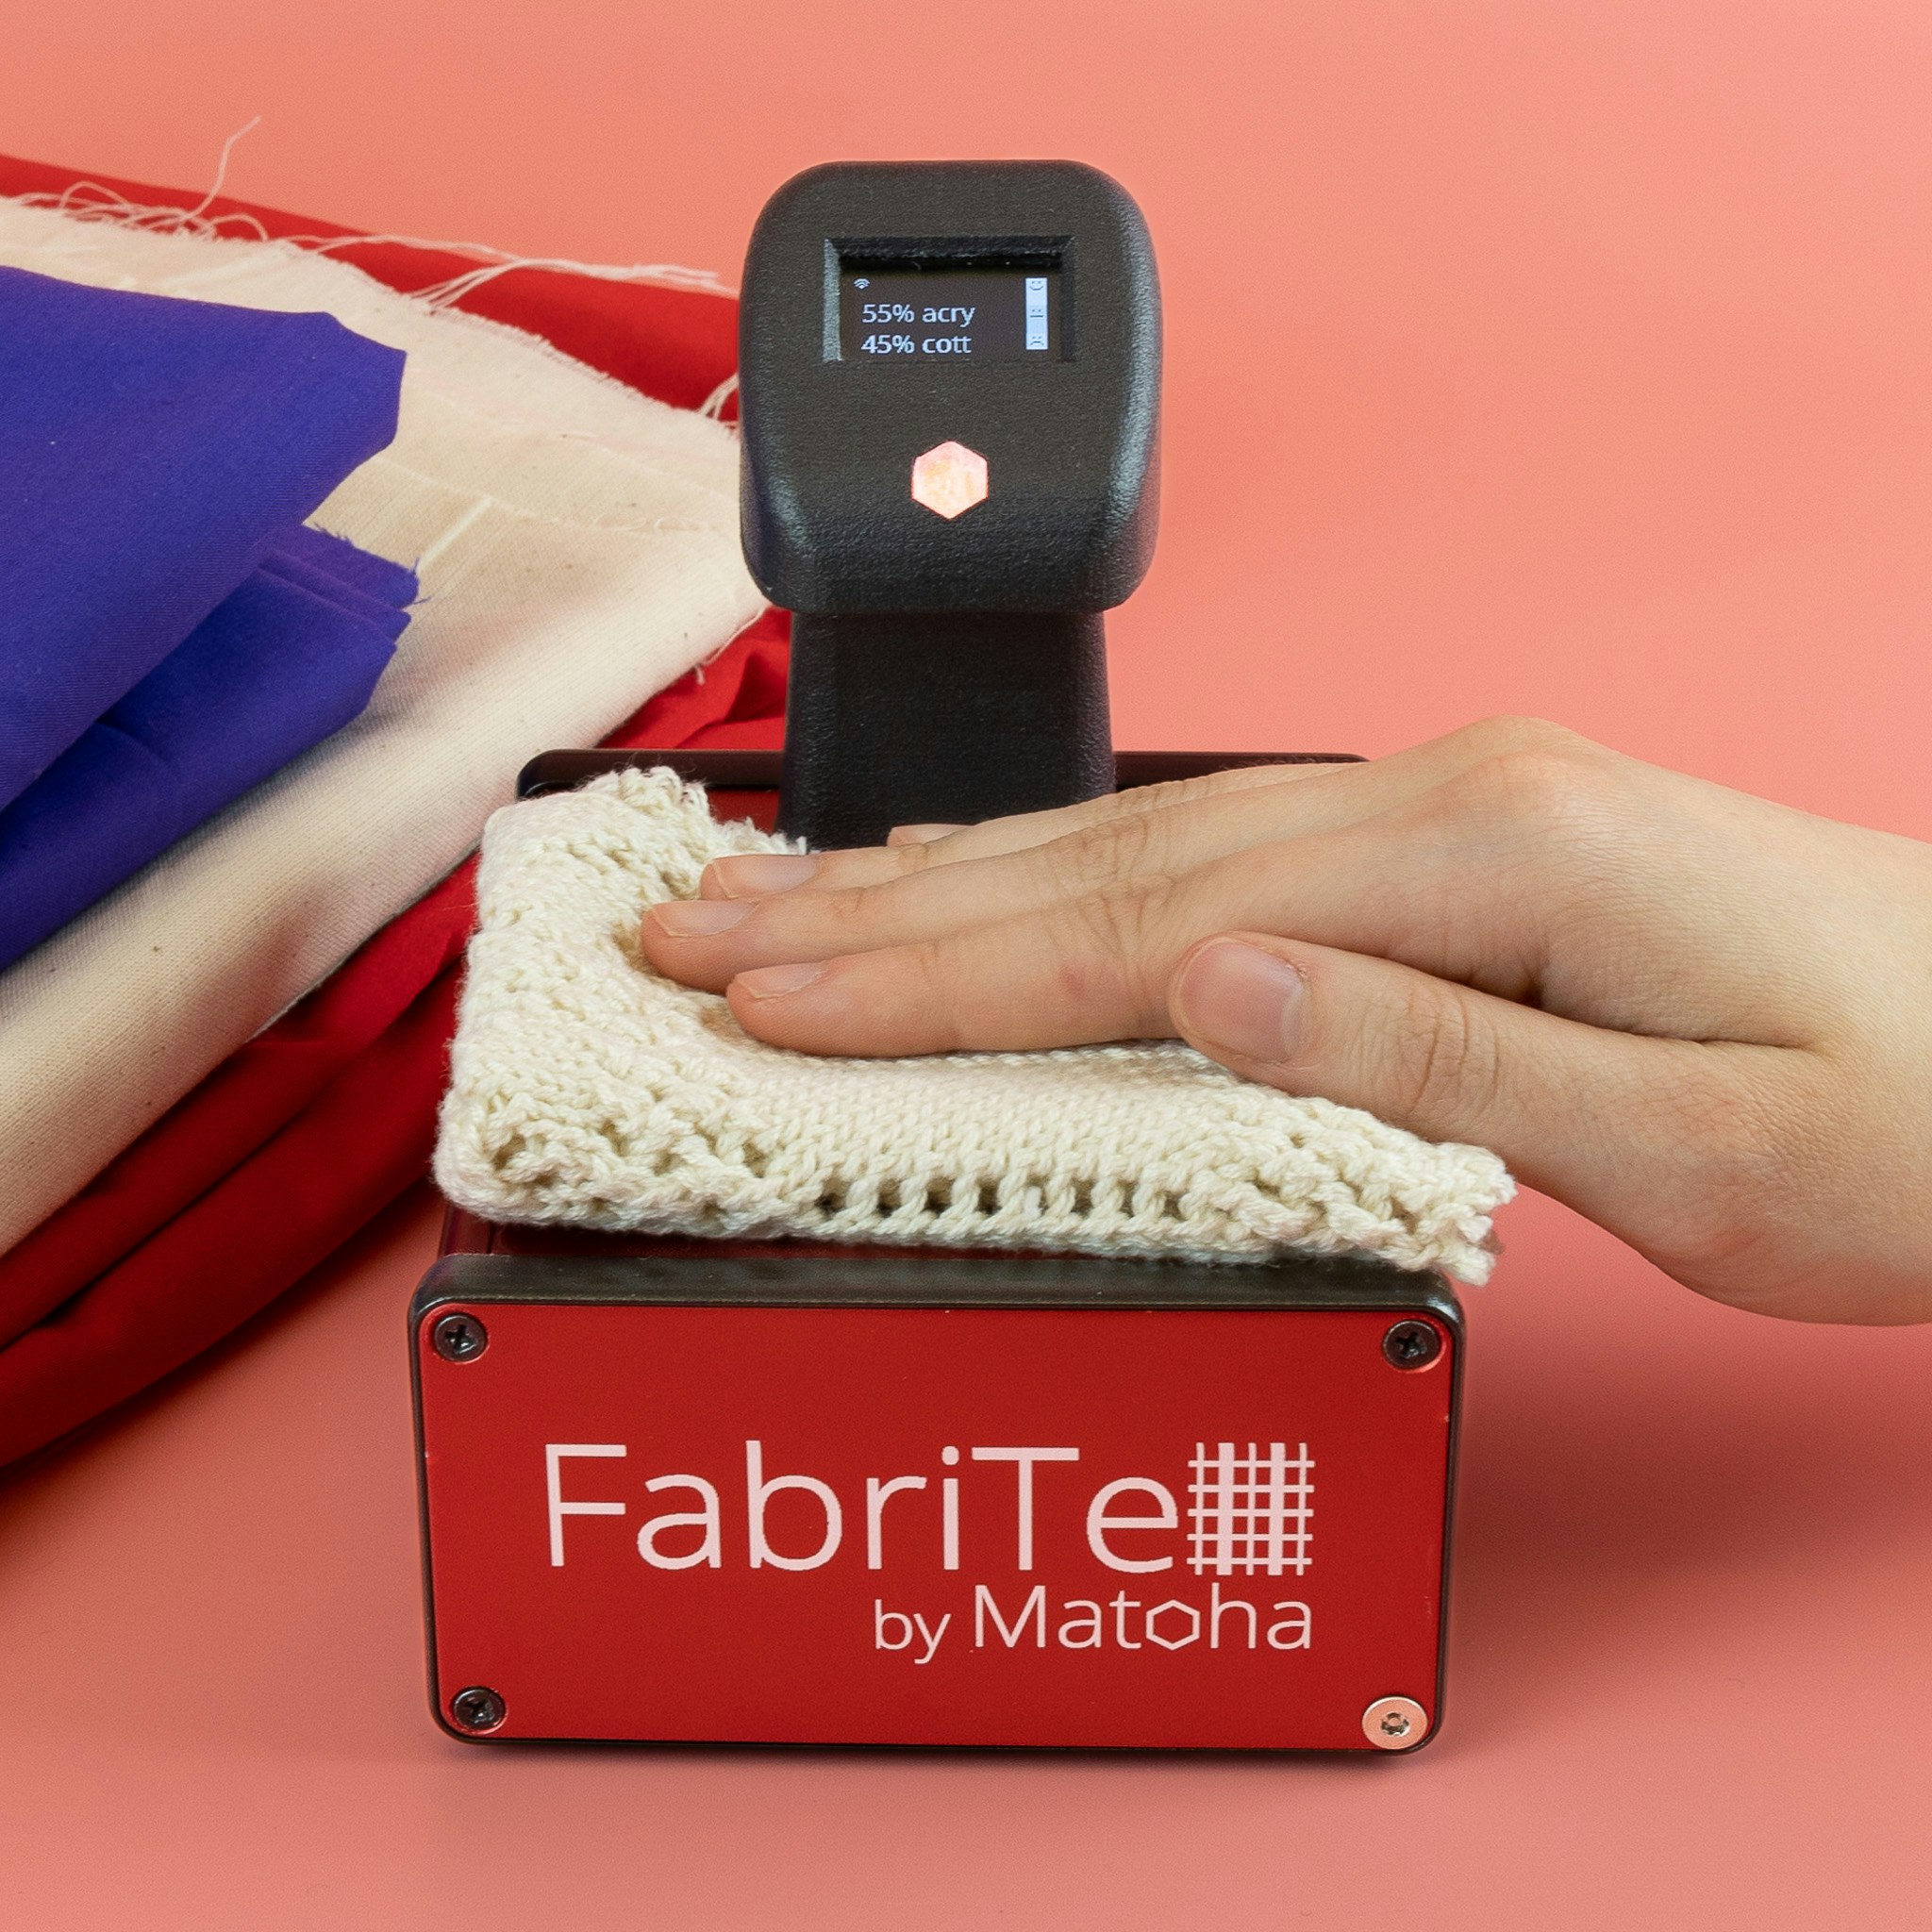 Matoha's Fabritell scanner